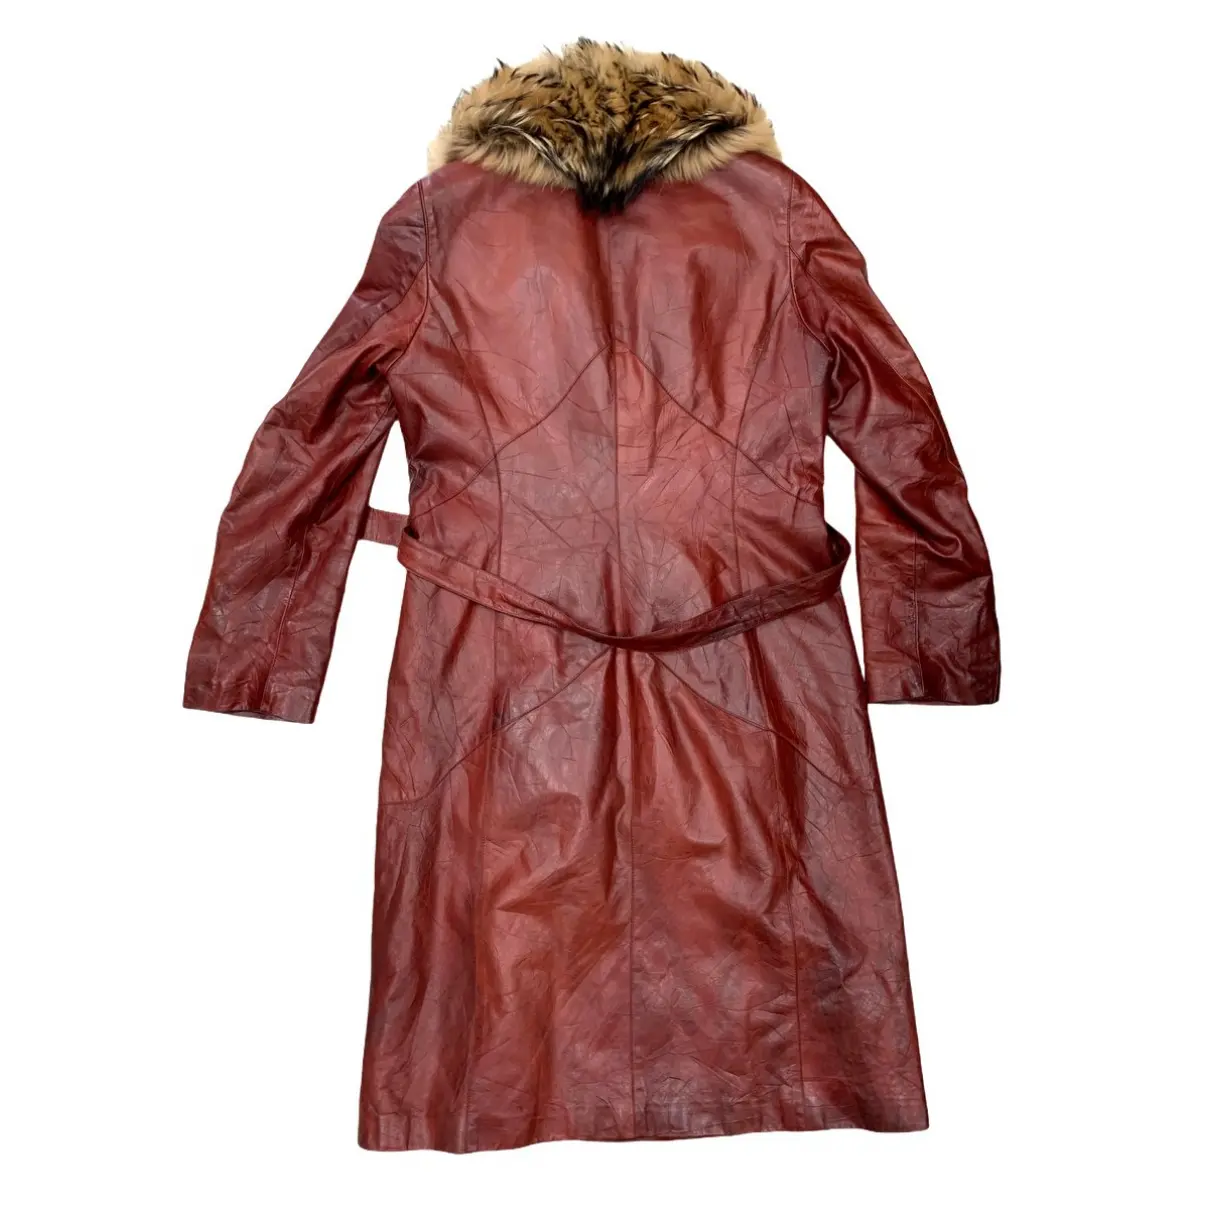 Buy Mabrun Leather coat online